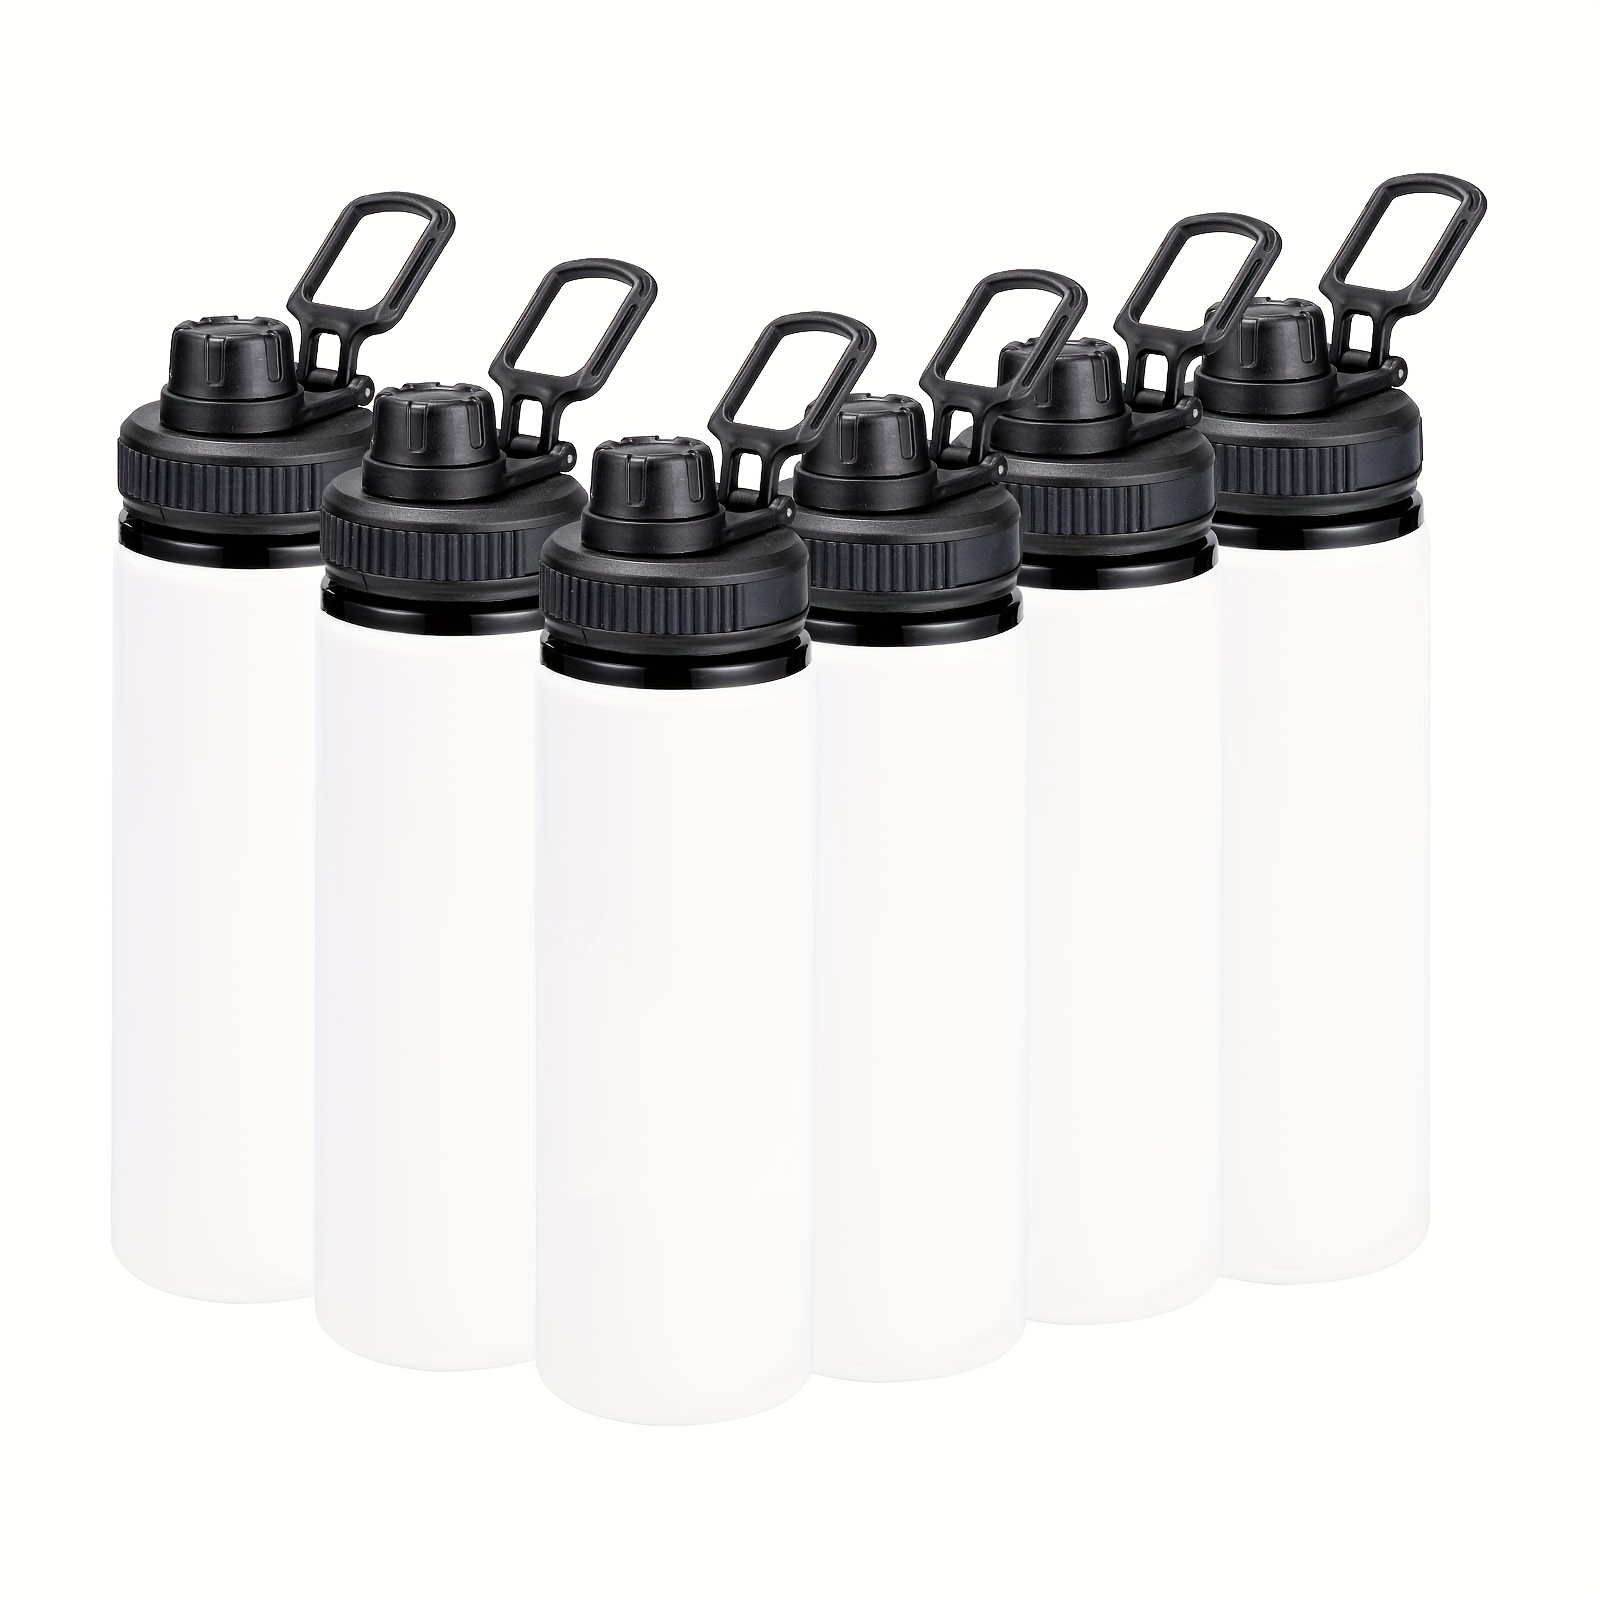 750mL Water Bottles with Carabiner Portable Aluminum Water Bottle